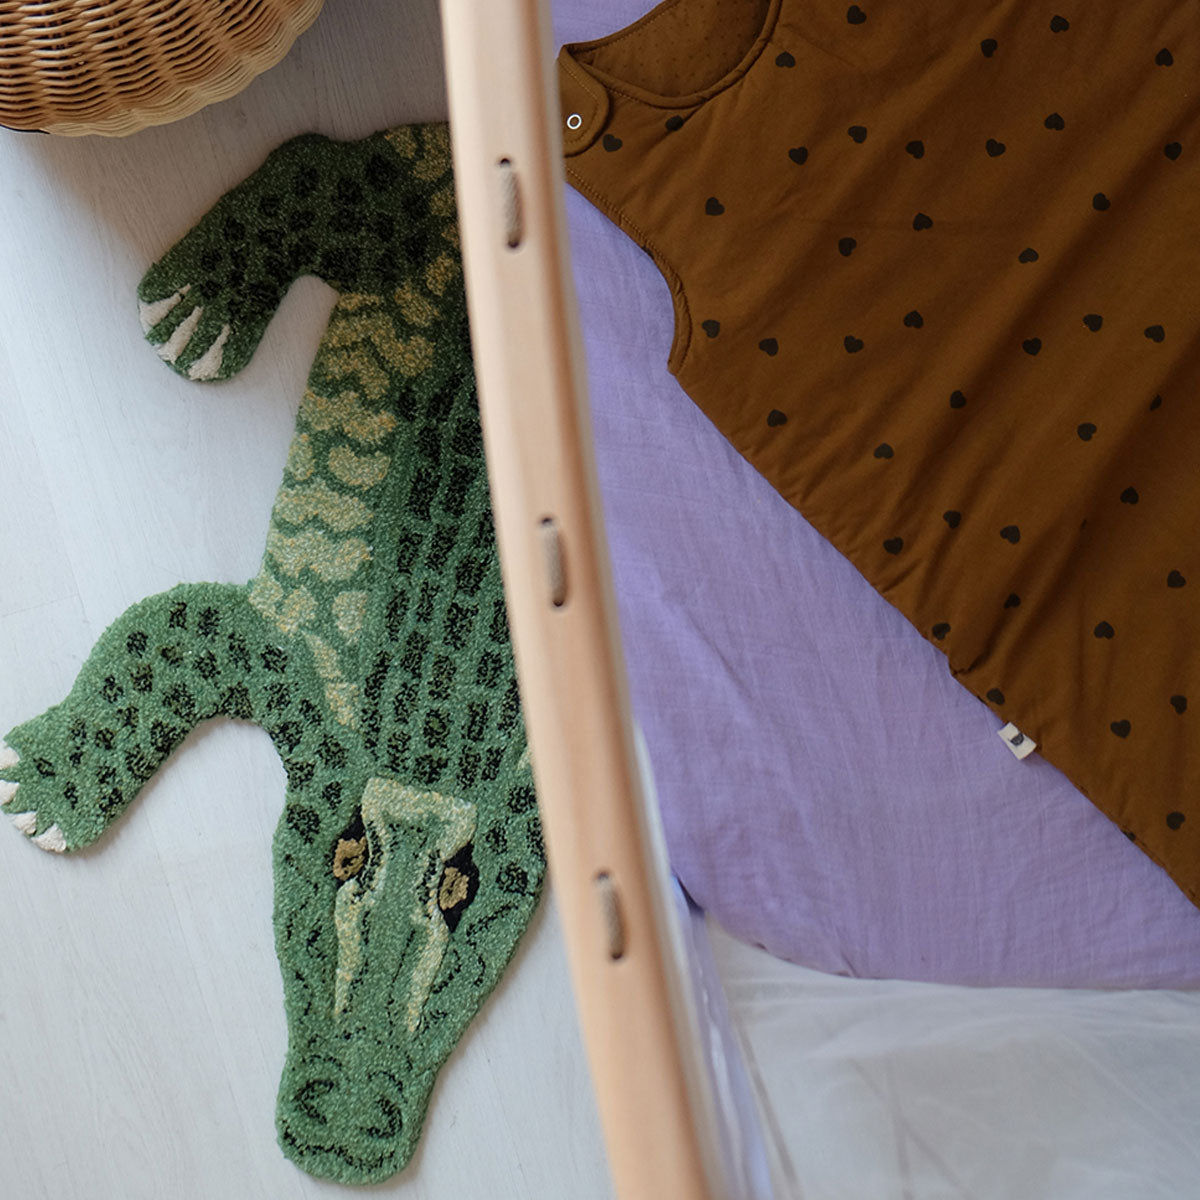 Coolio Crocodile Rug Small - Doing Goods